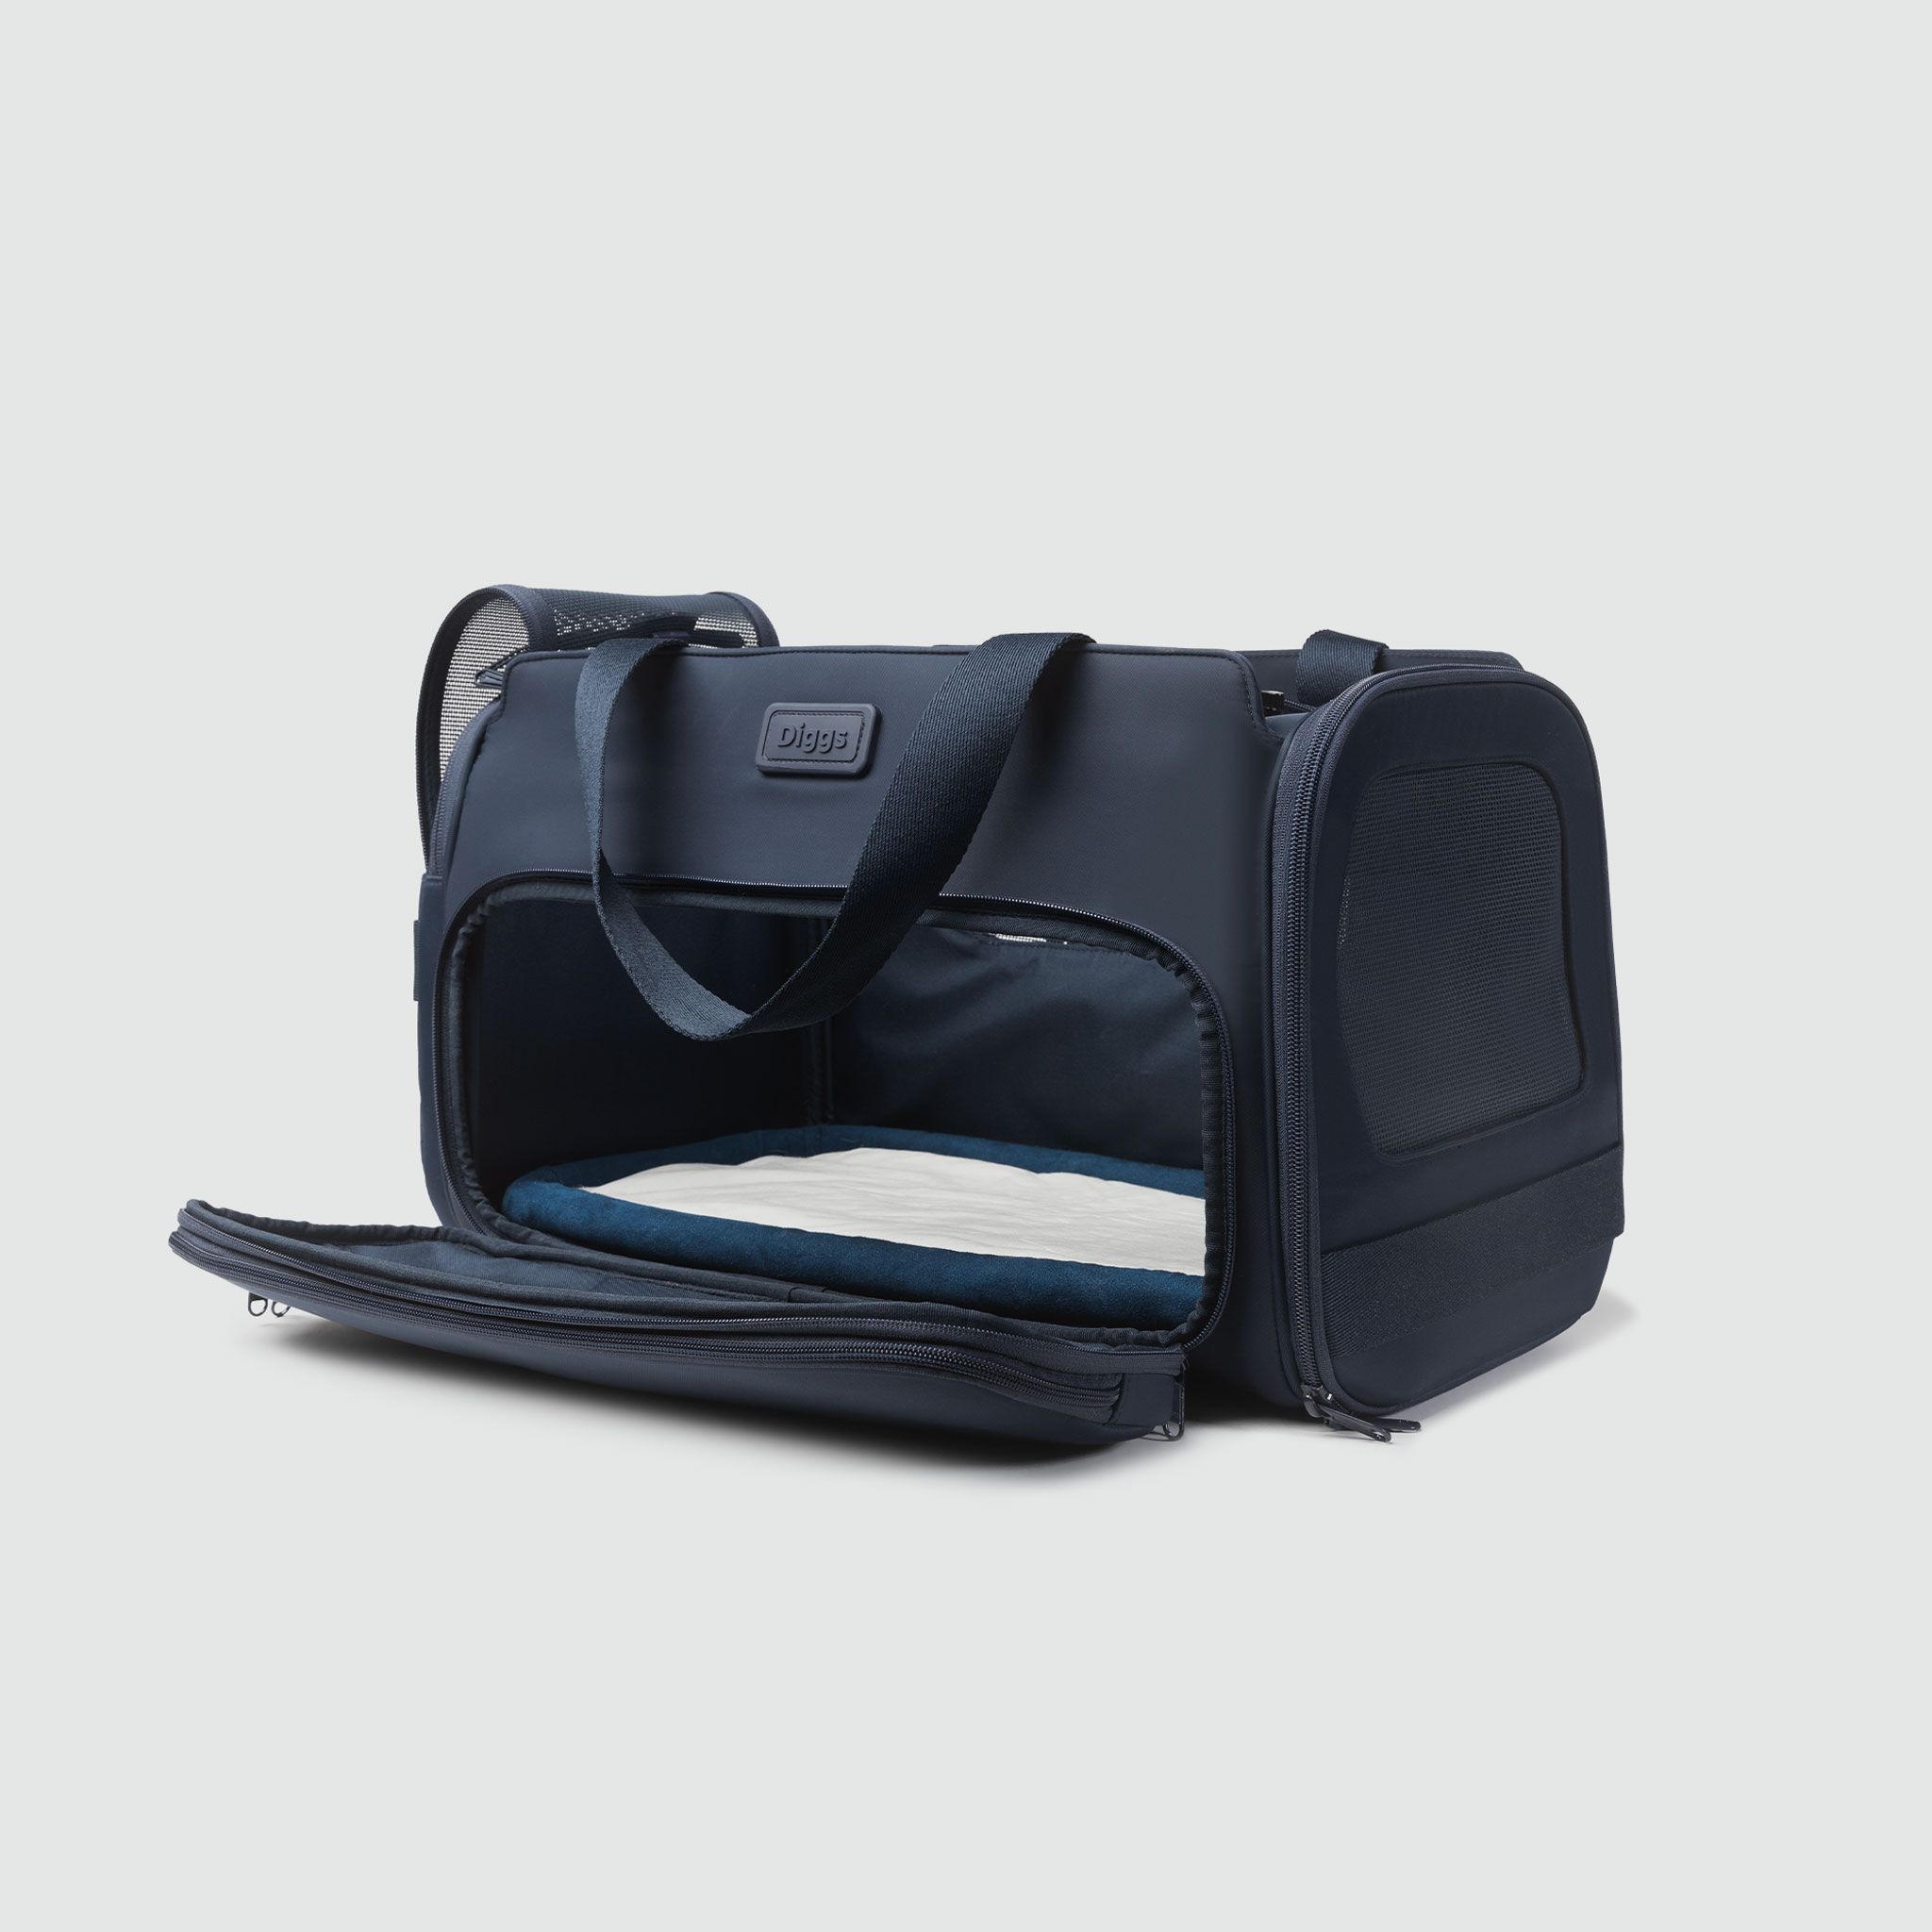 A blue Passenger pet carrier bag with a zippered compartment